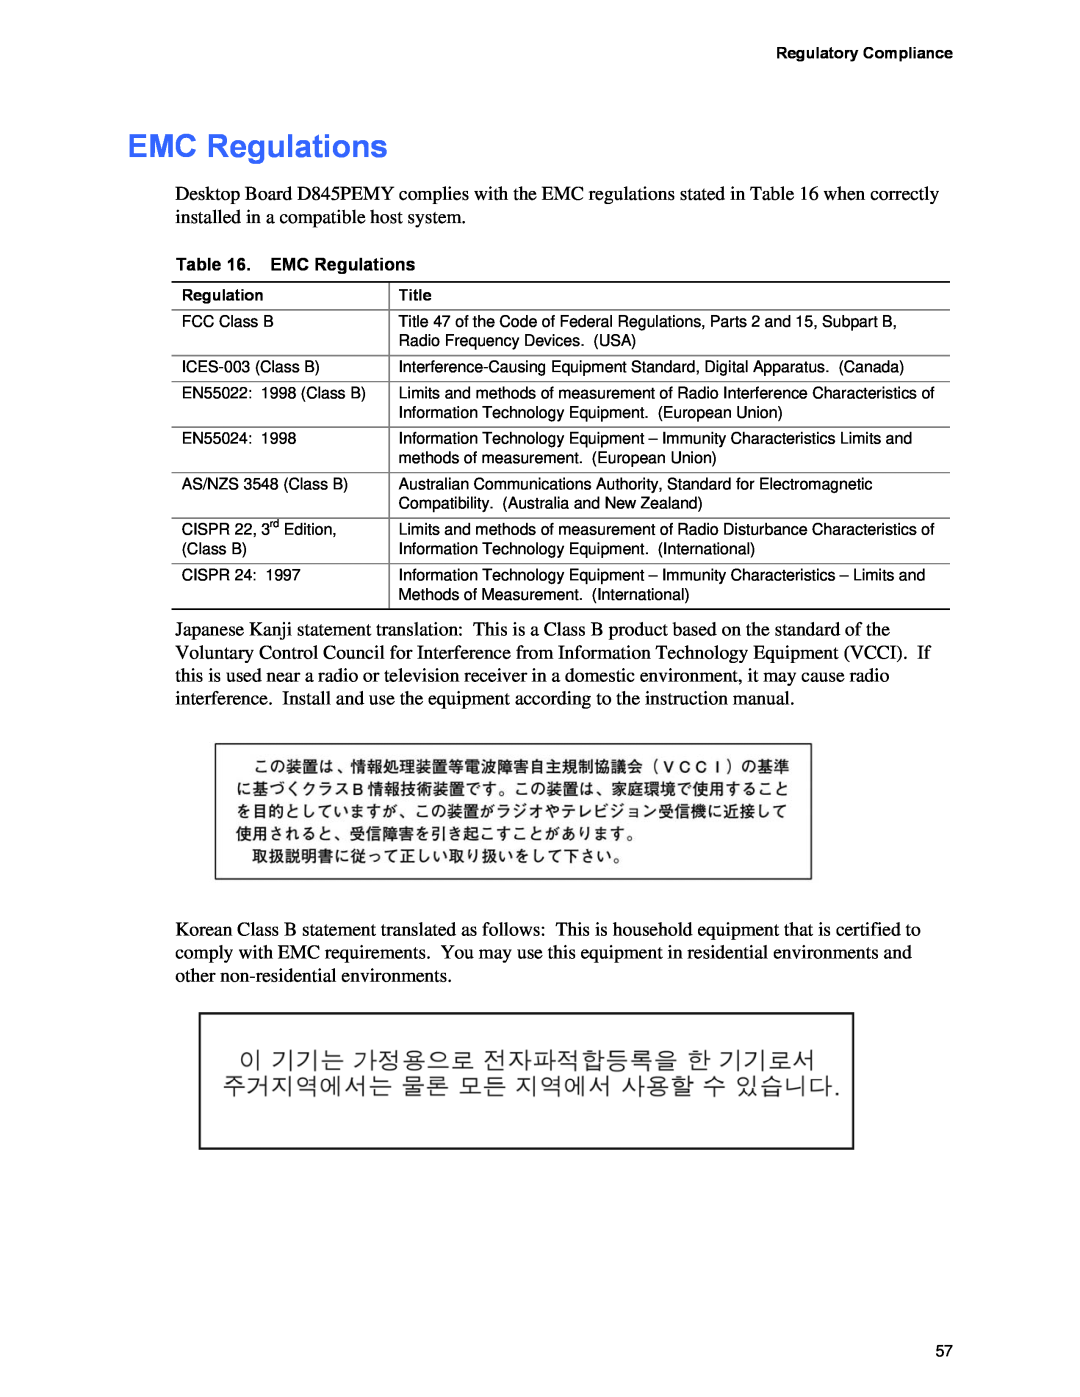 Intel D845PEMY manual EMC Regulations 